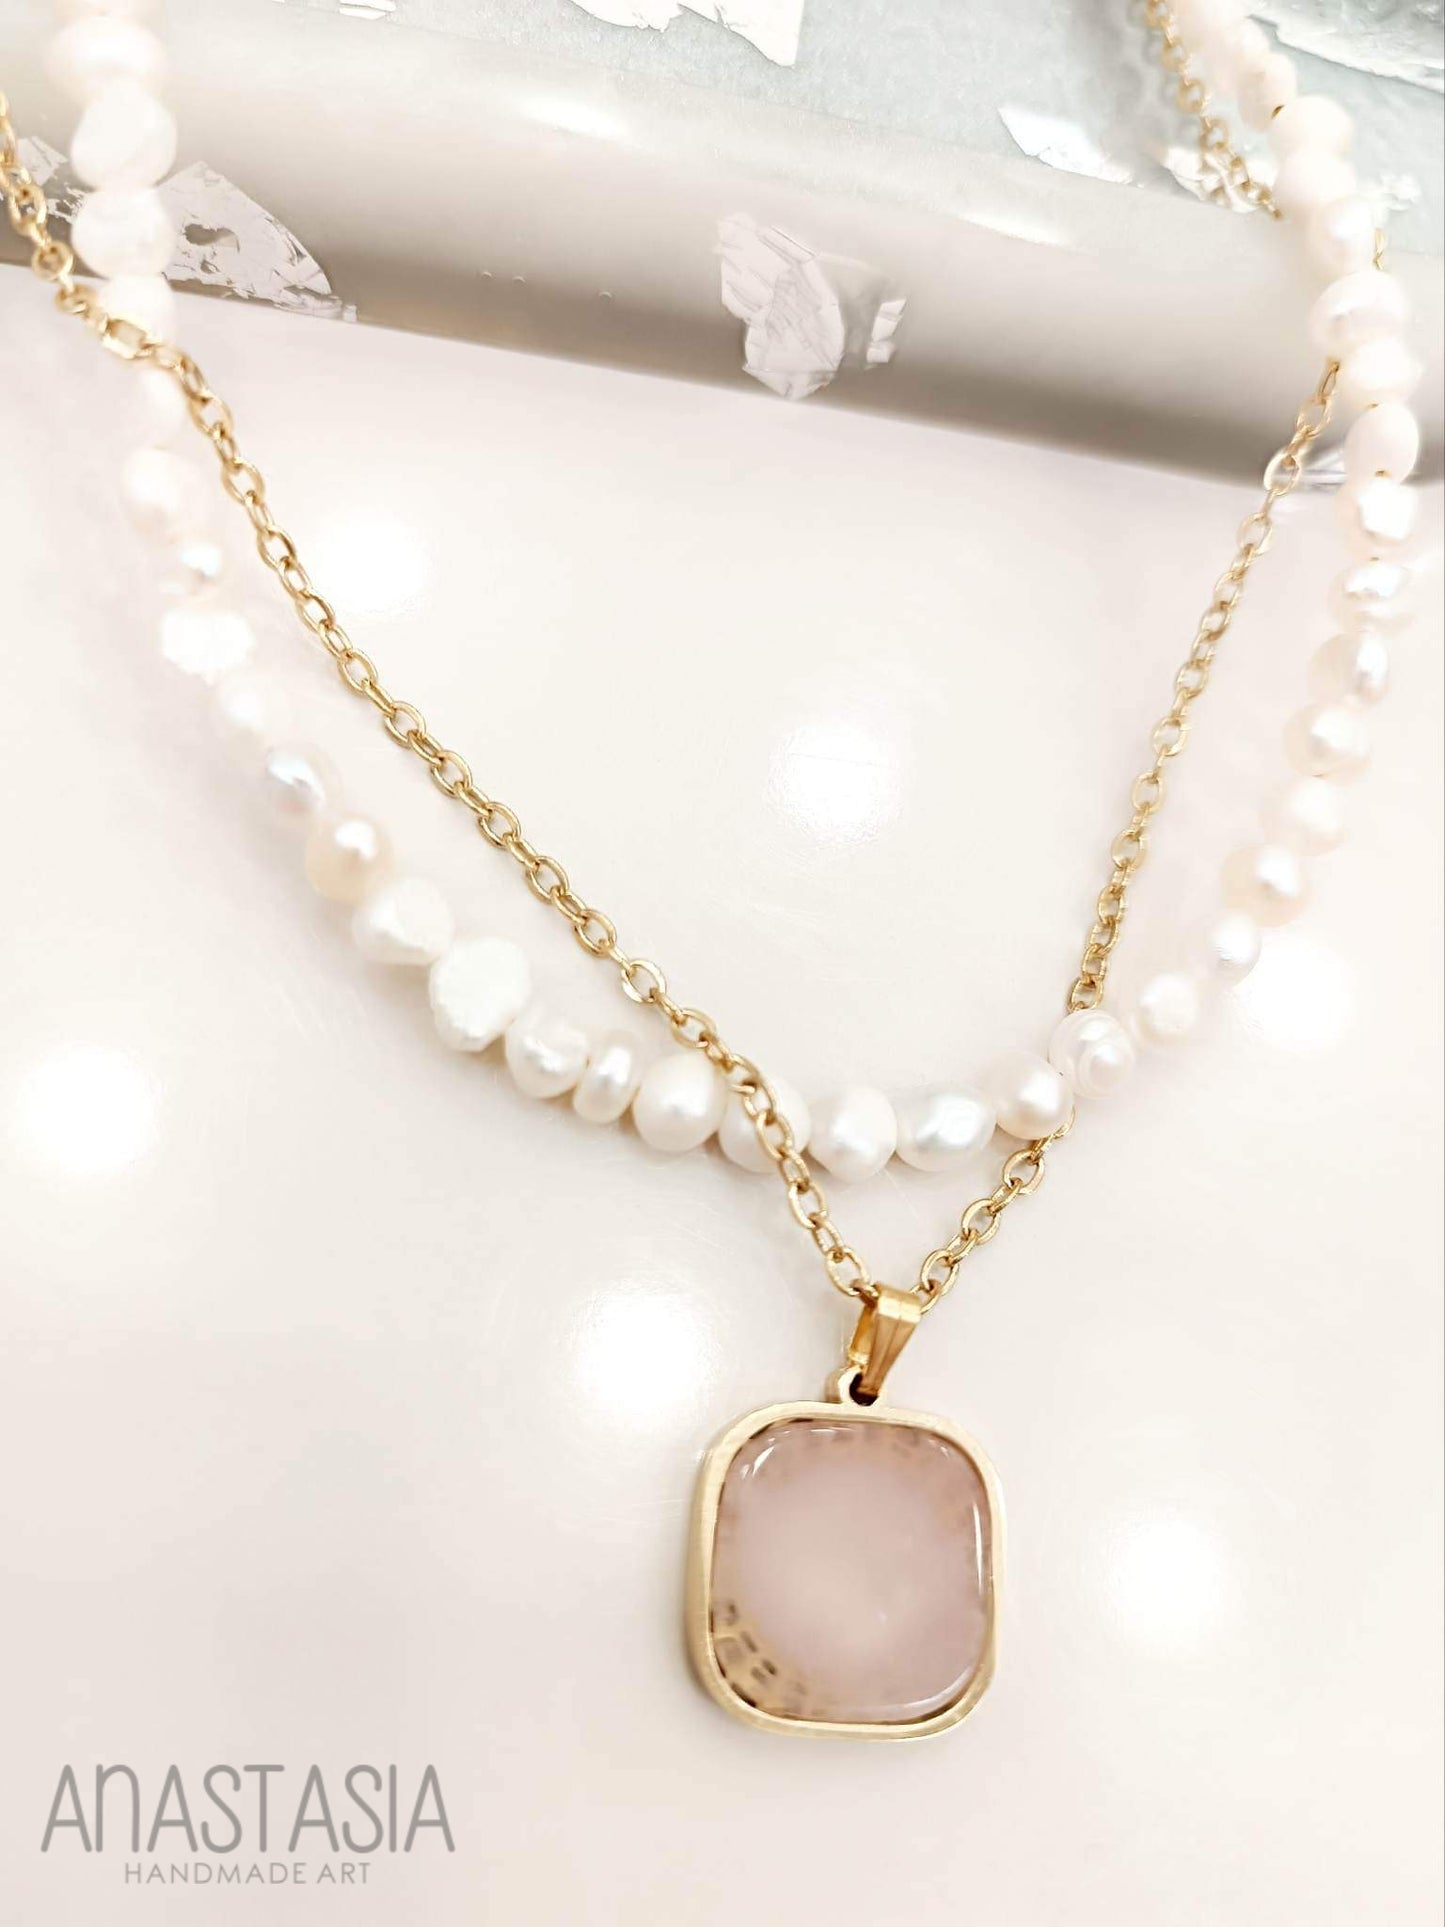 Necklace with rose quartz stone charm